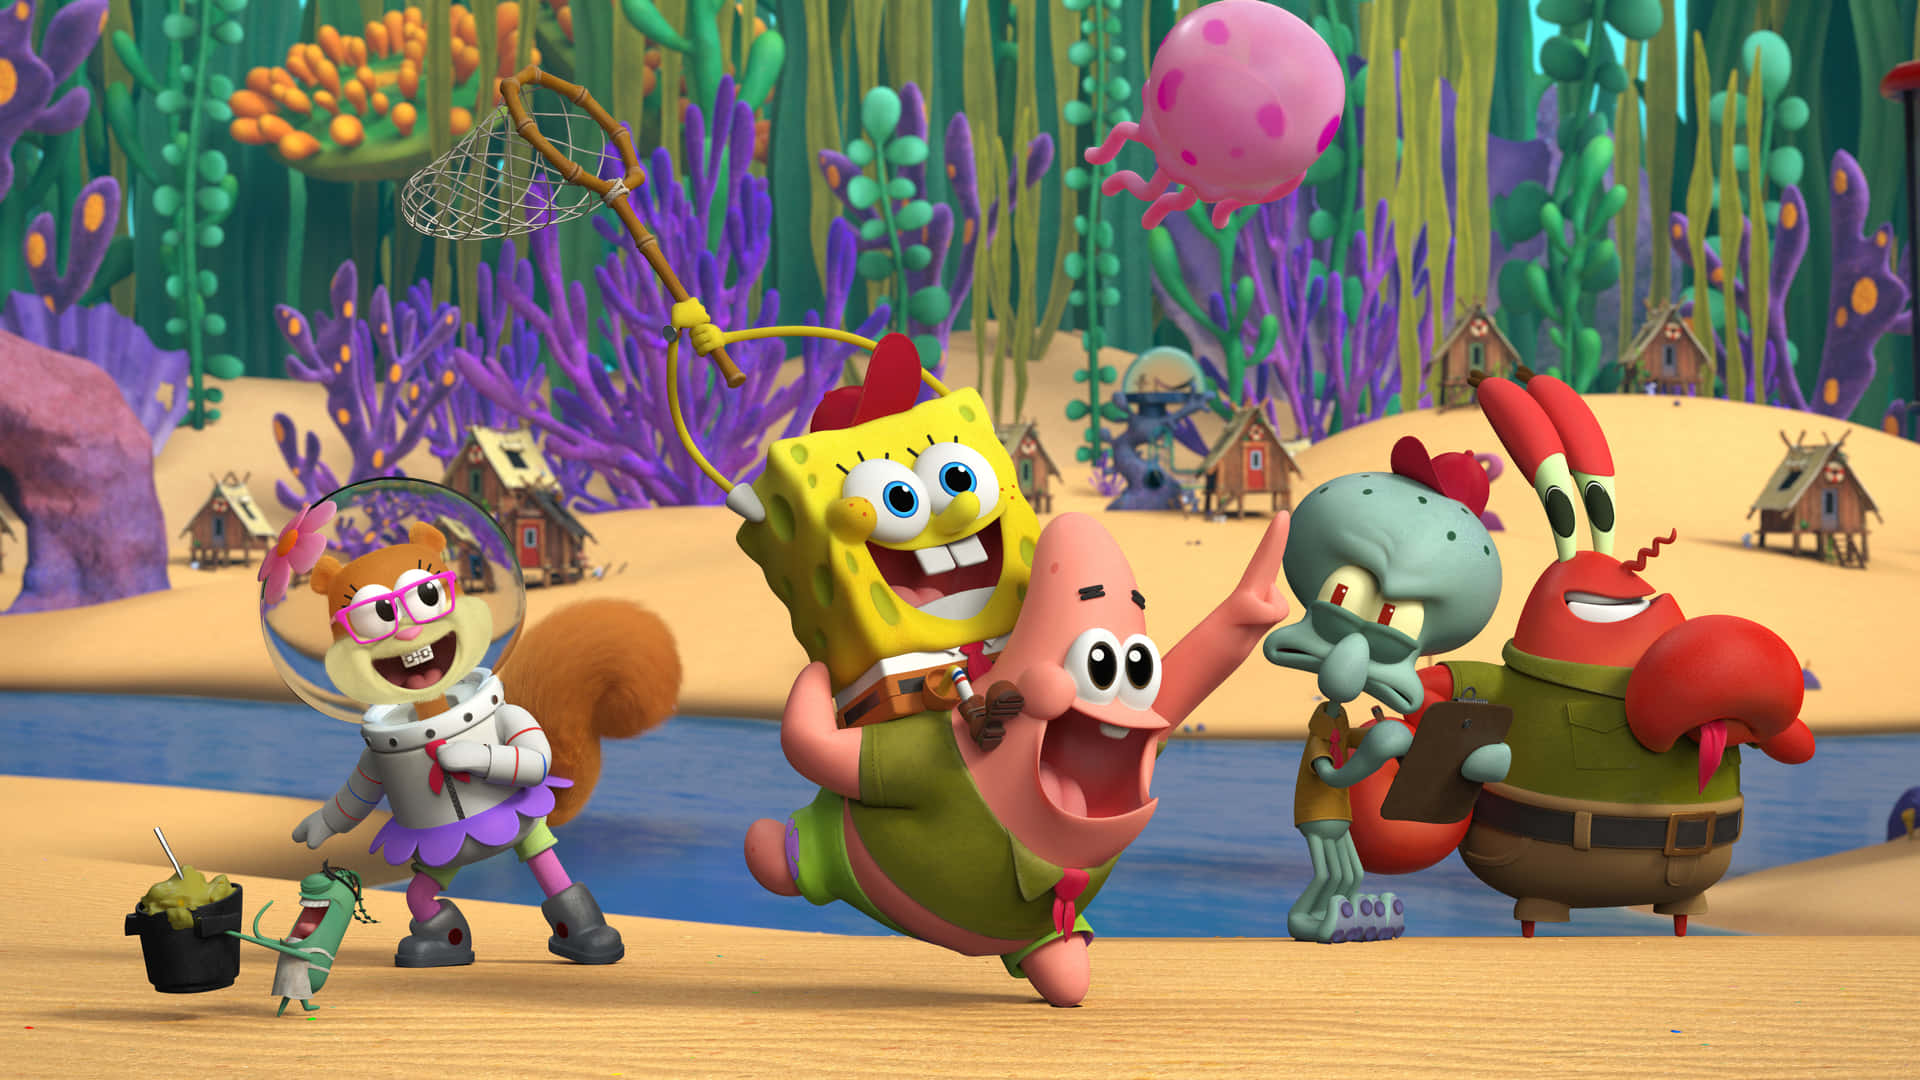 Spongebob And Patrick In Adventure - 